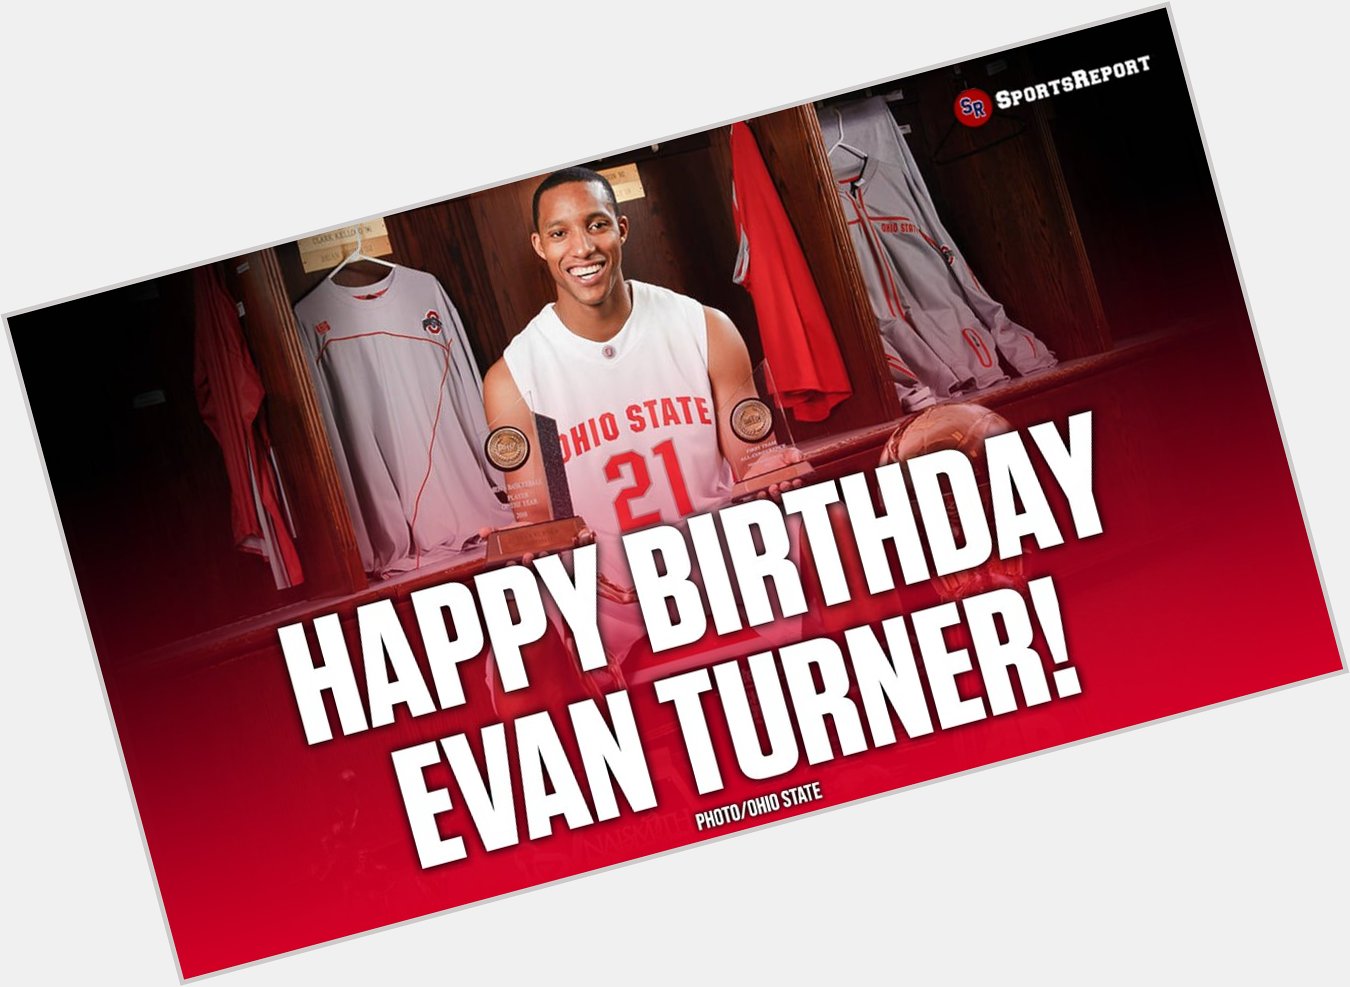  Fans, let\s wish legend Evan Turner a Happy Birthday! GO 